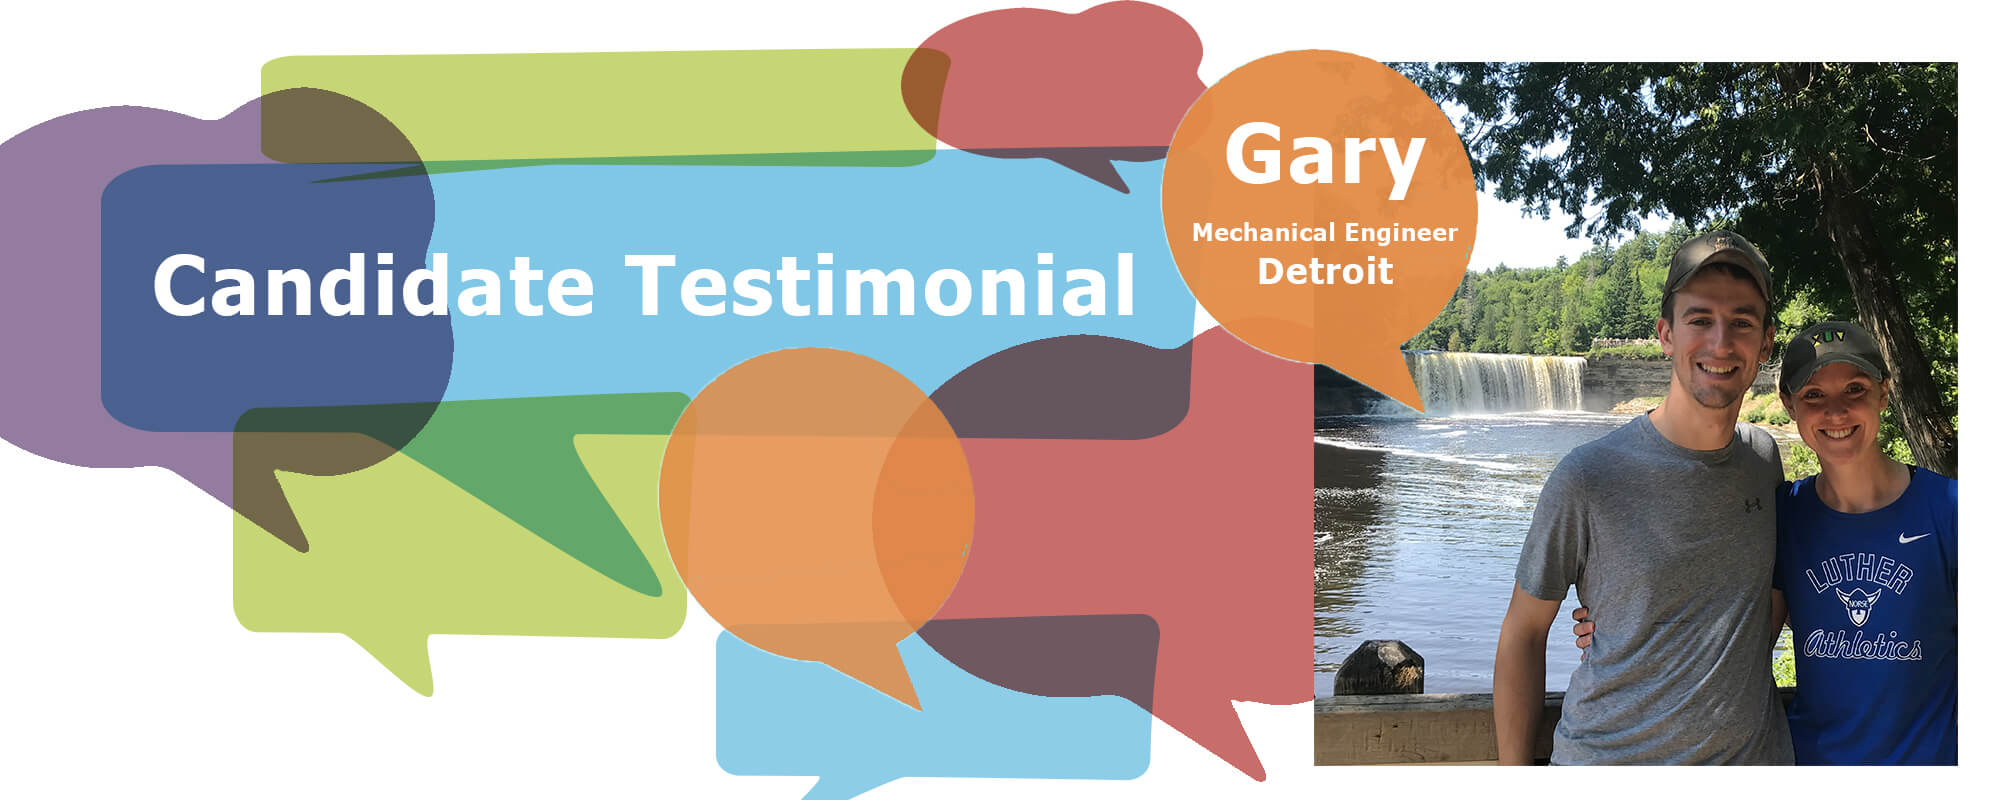 Candidate Testimonial: Gary P